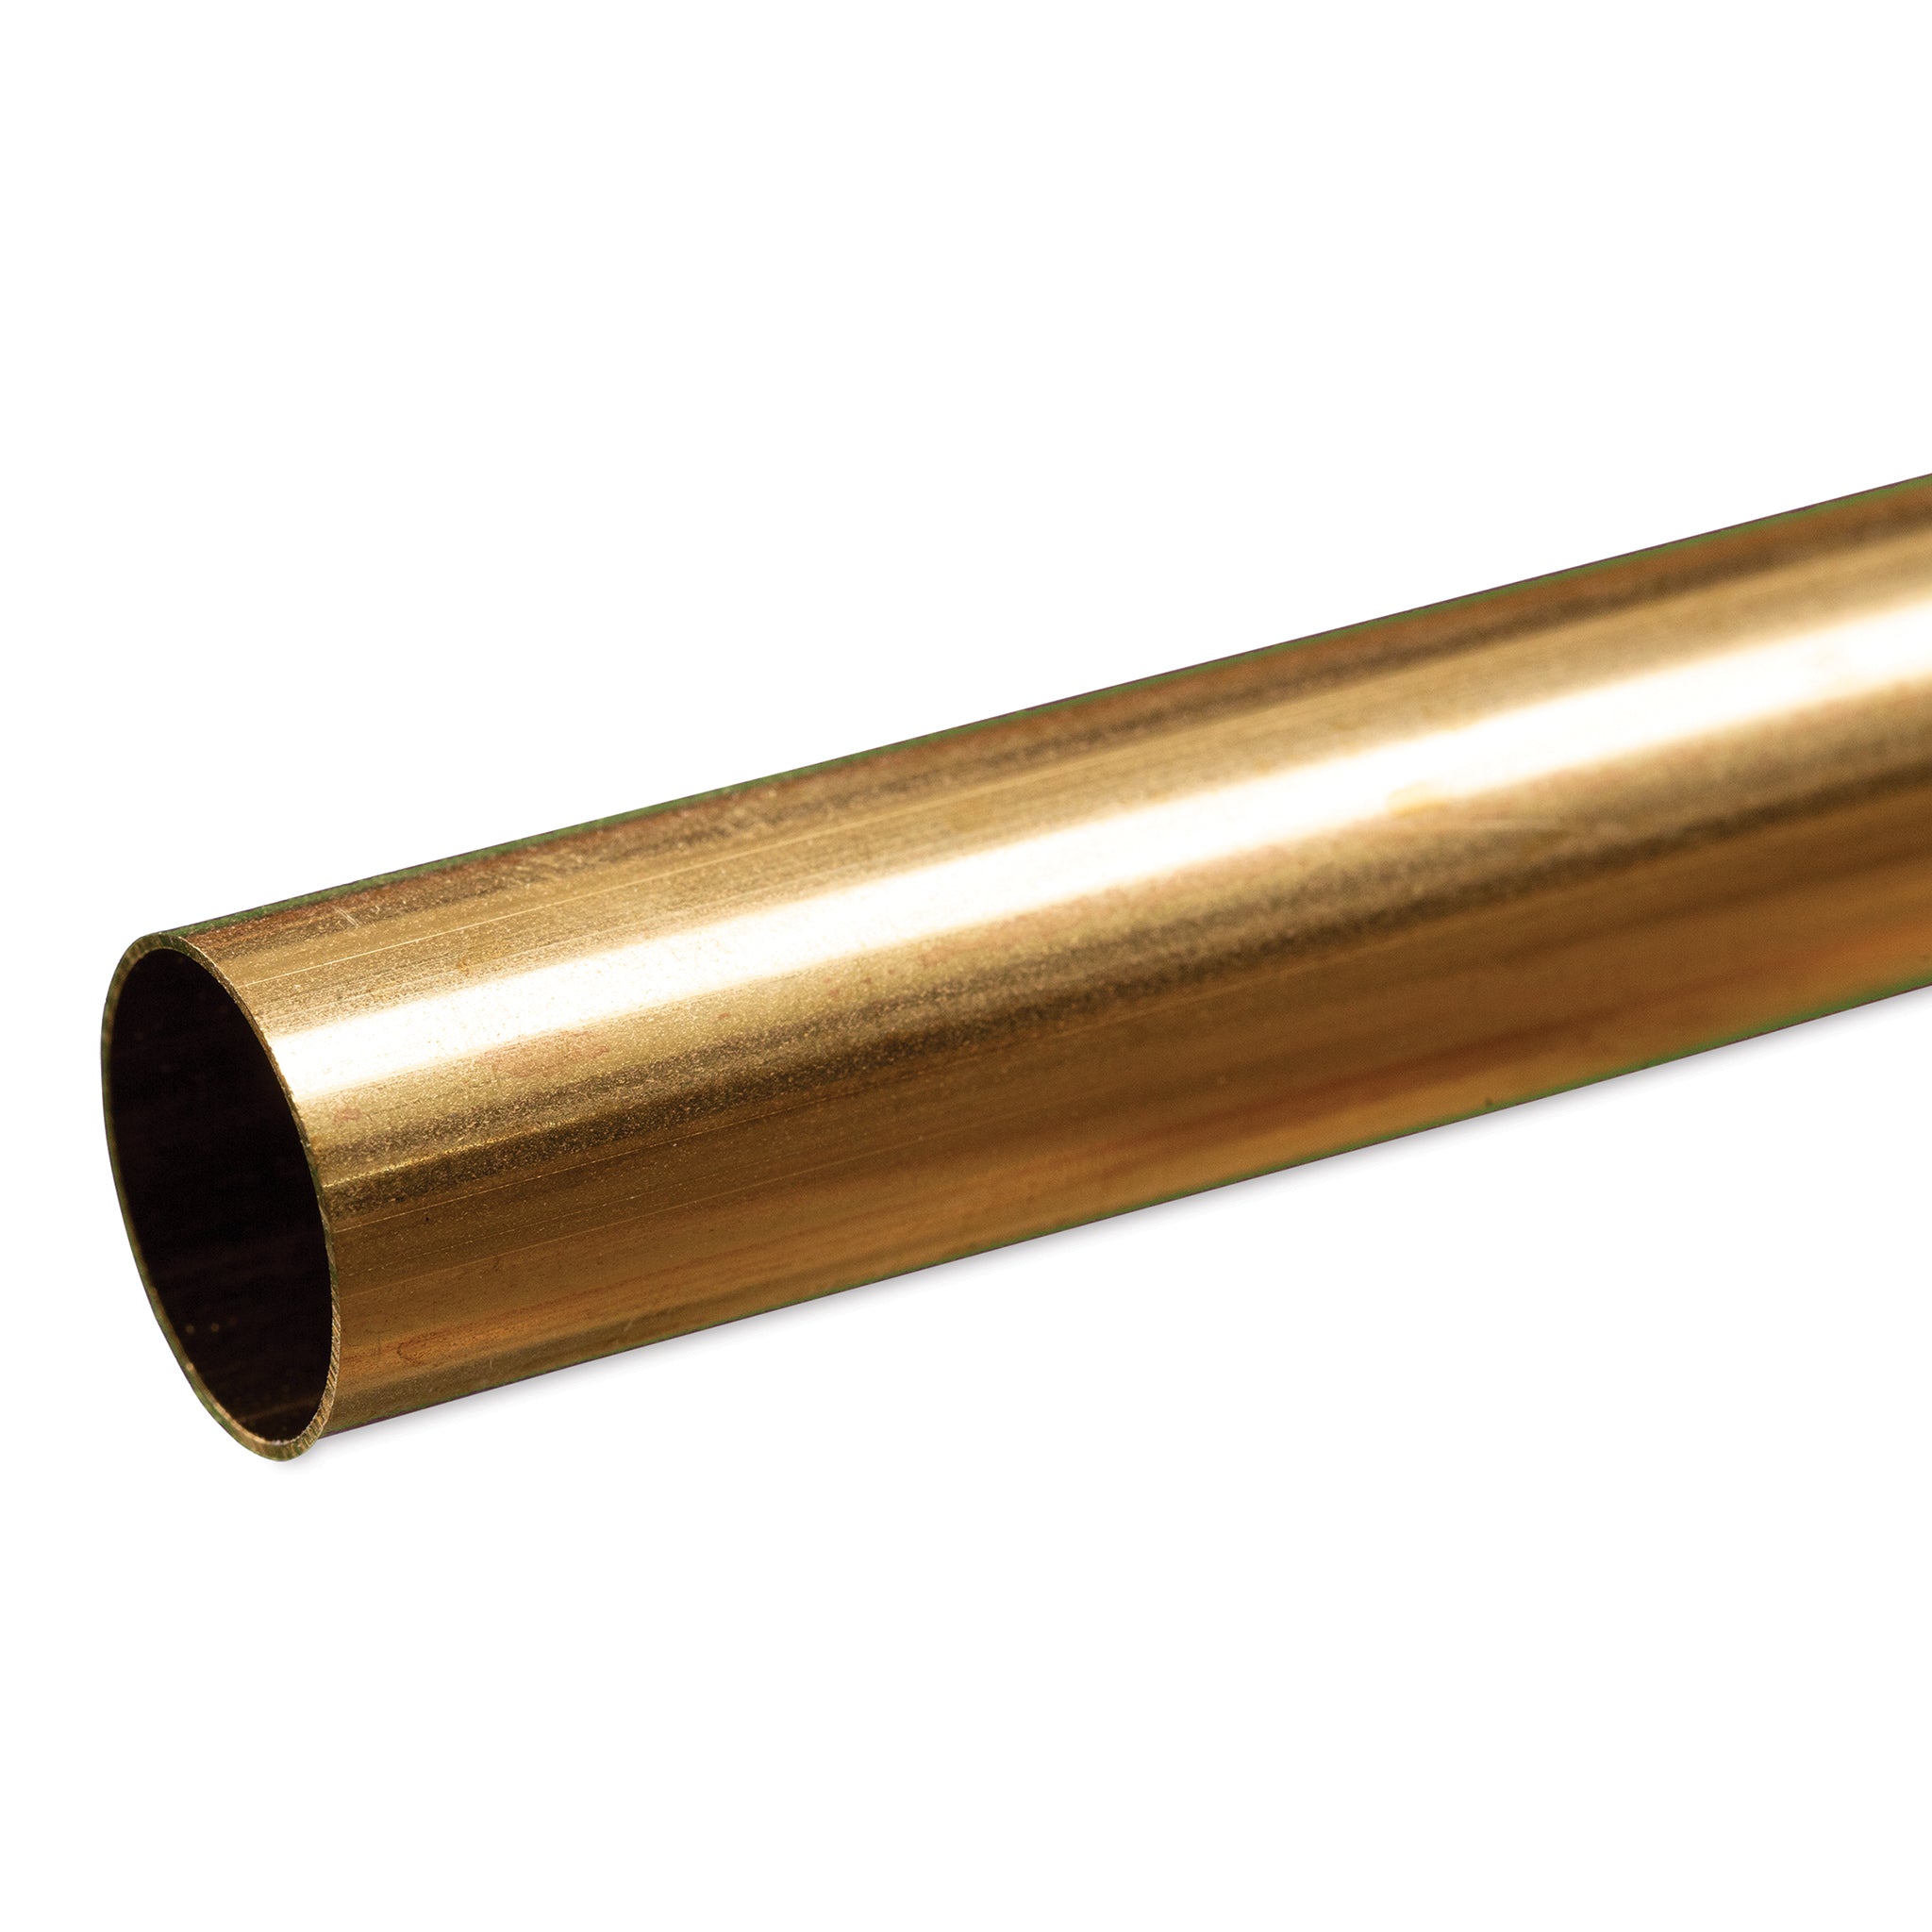 K&S Metals 8141 Round Brass Tube 9/16" OD x 0.014" Wall x 12" Long (1 Piece)